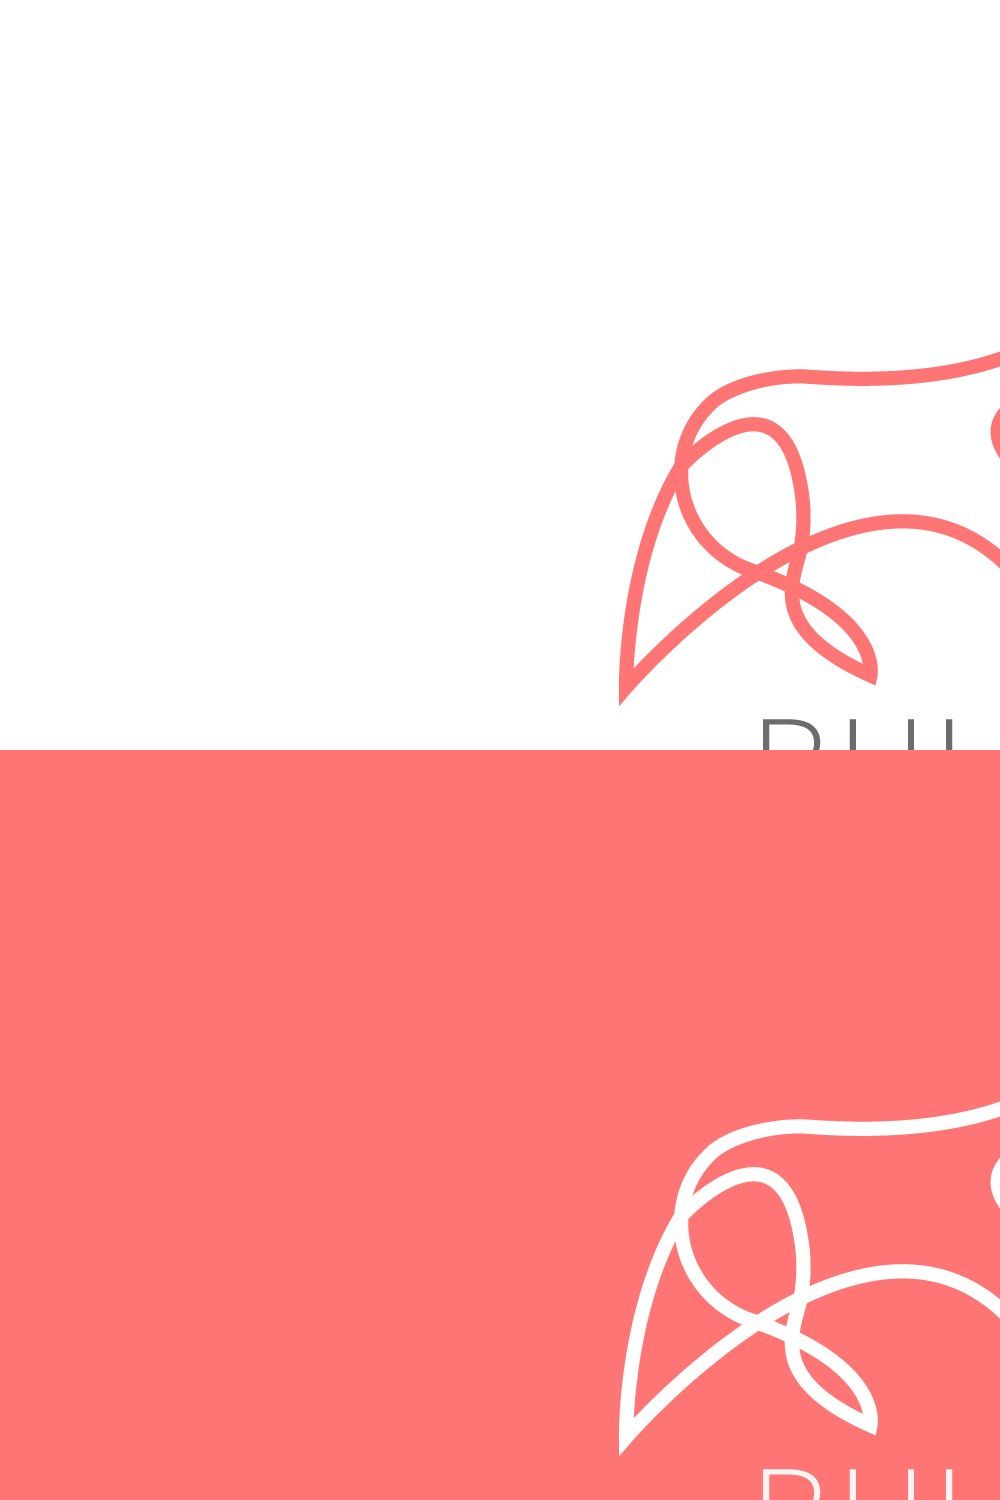 Bull logo, Buffalo logo pinterest preview image.